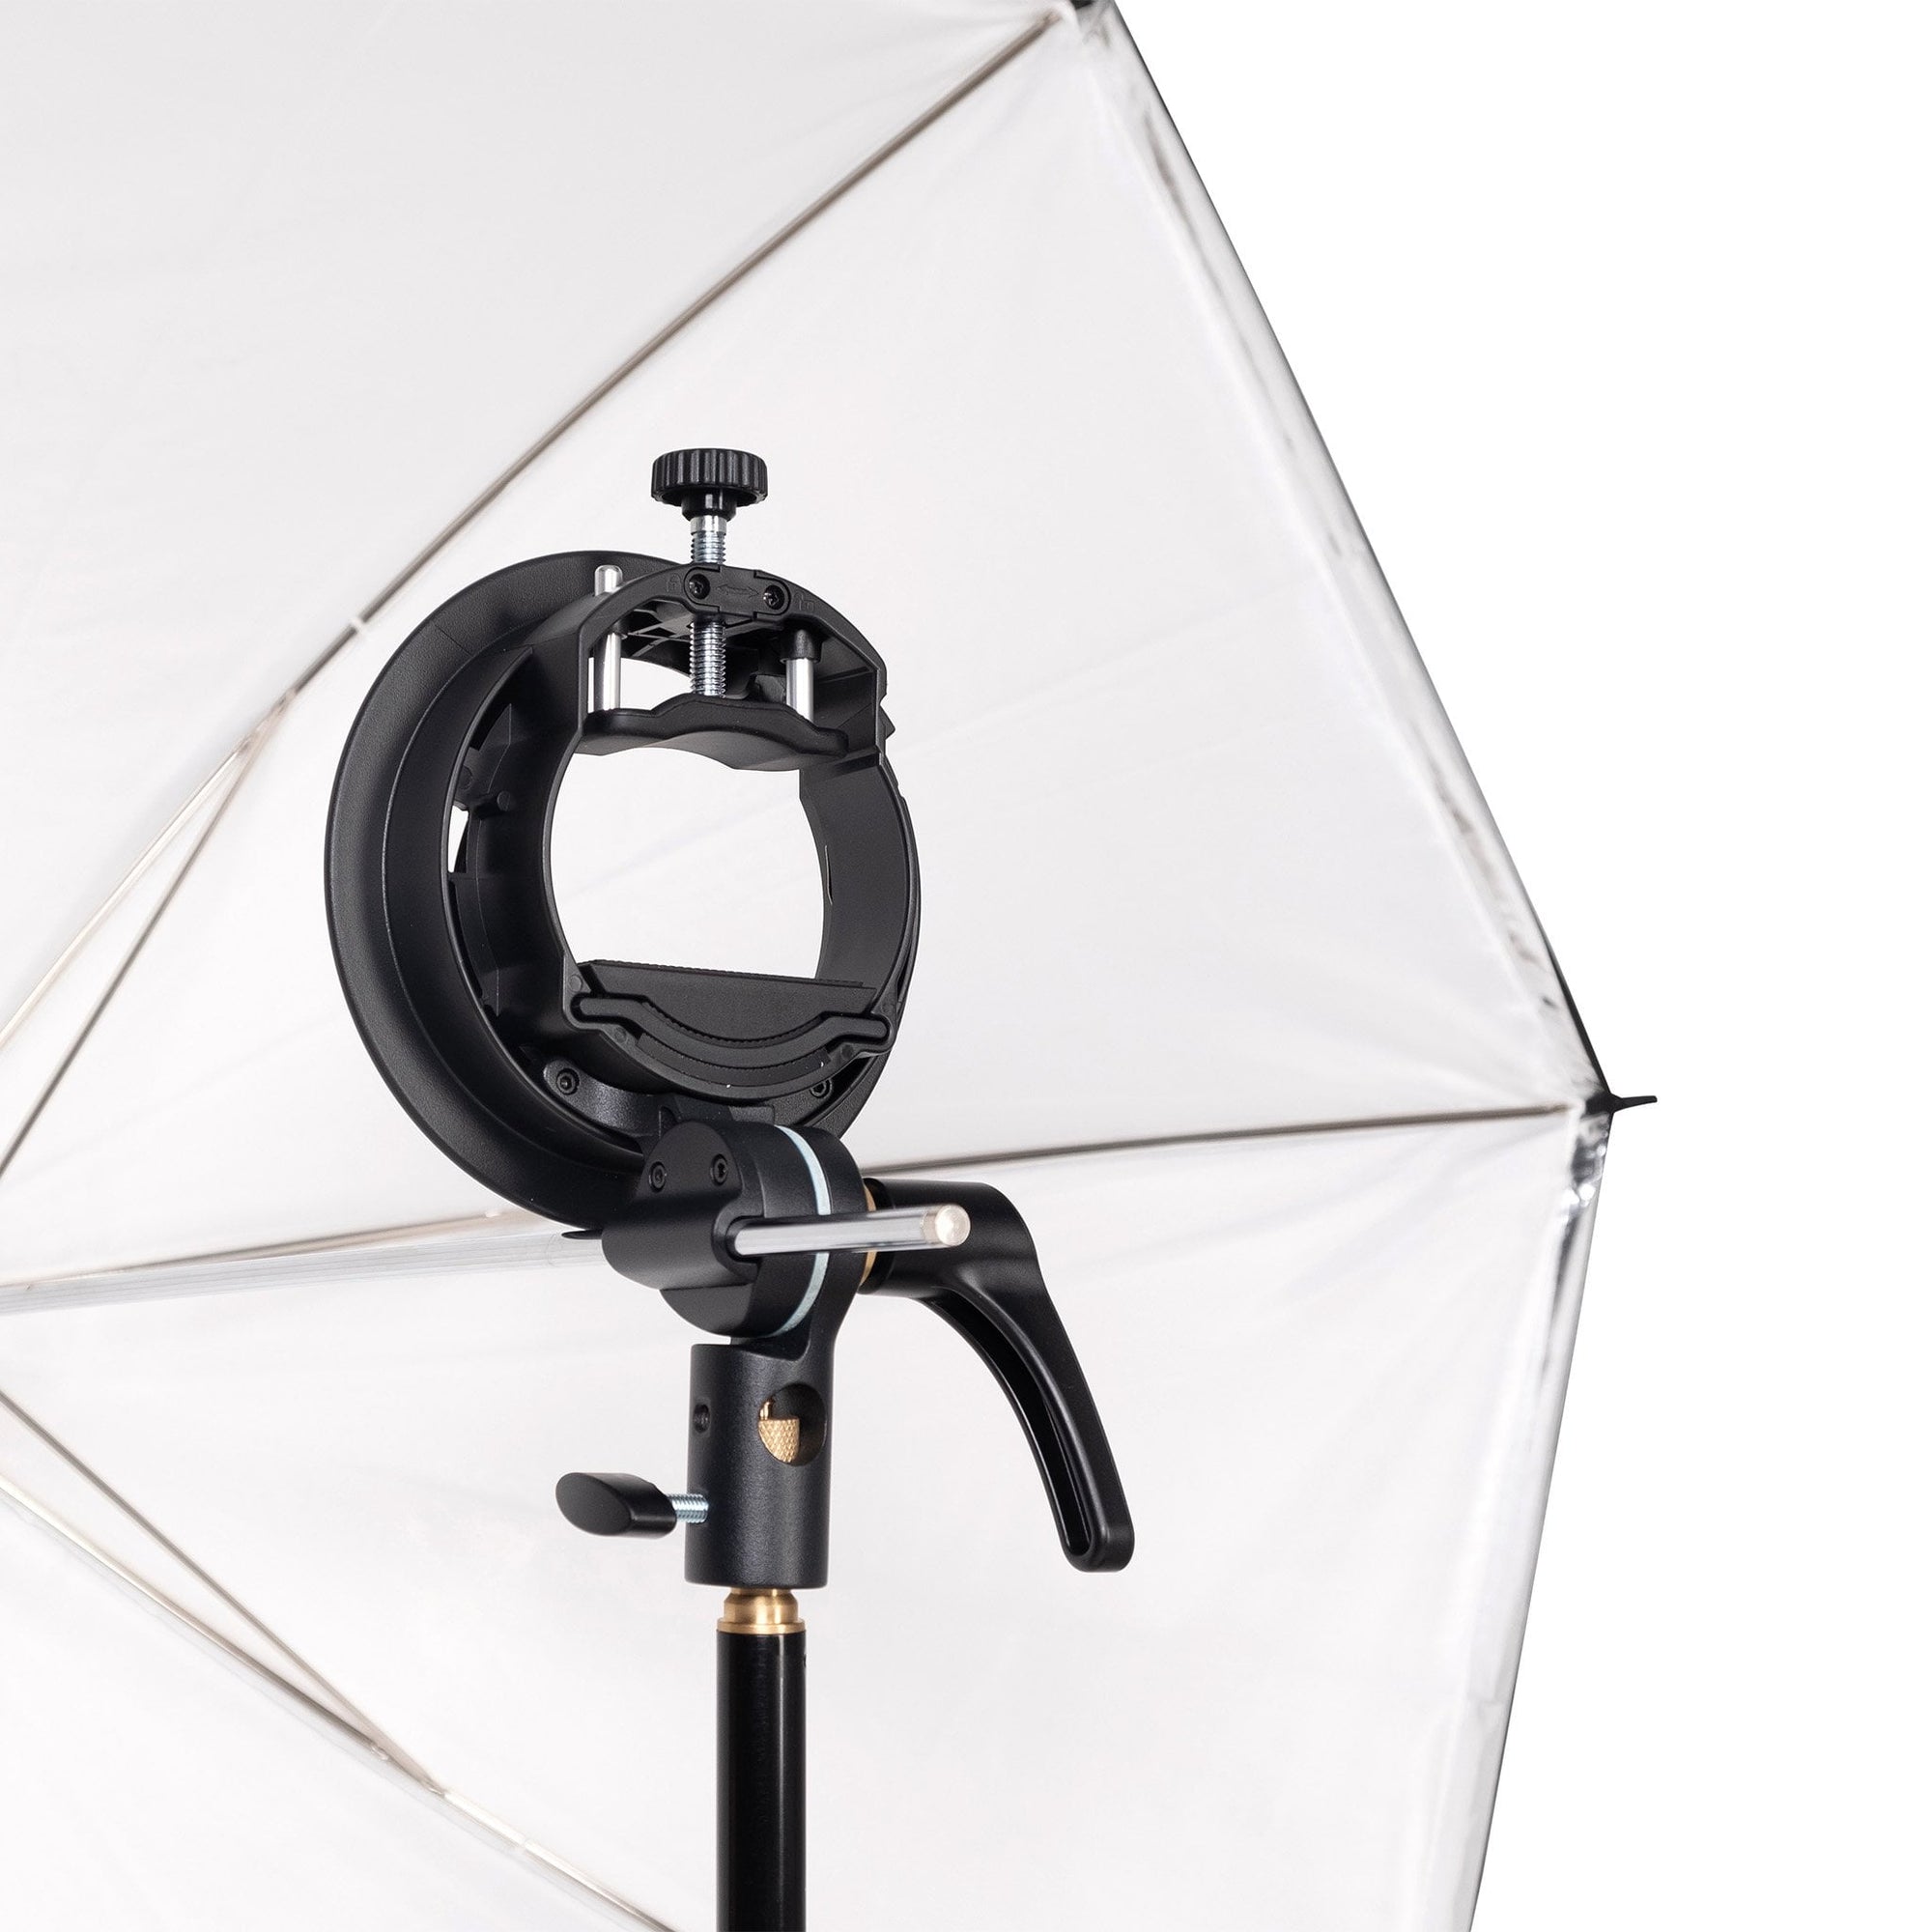 Strobepro Speedlite Flash Umbrella Kit - Double